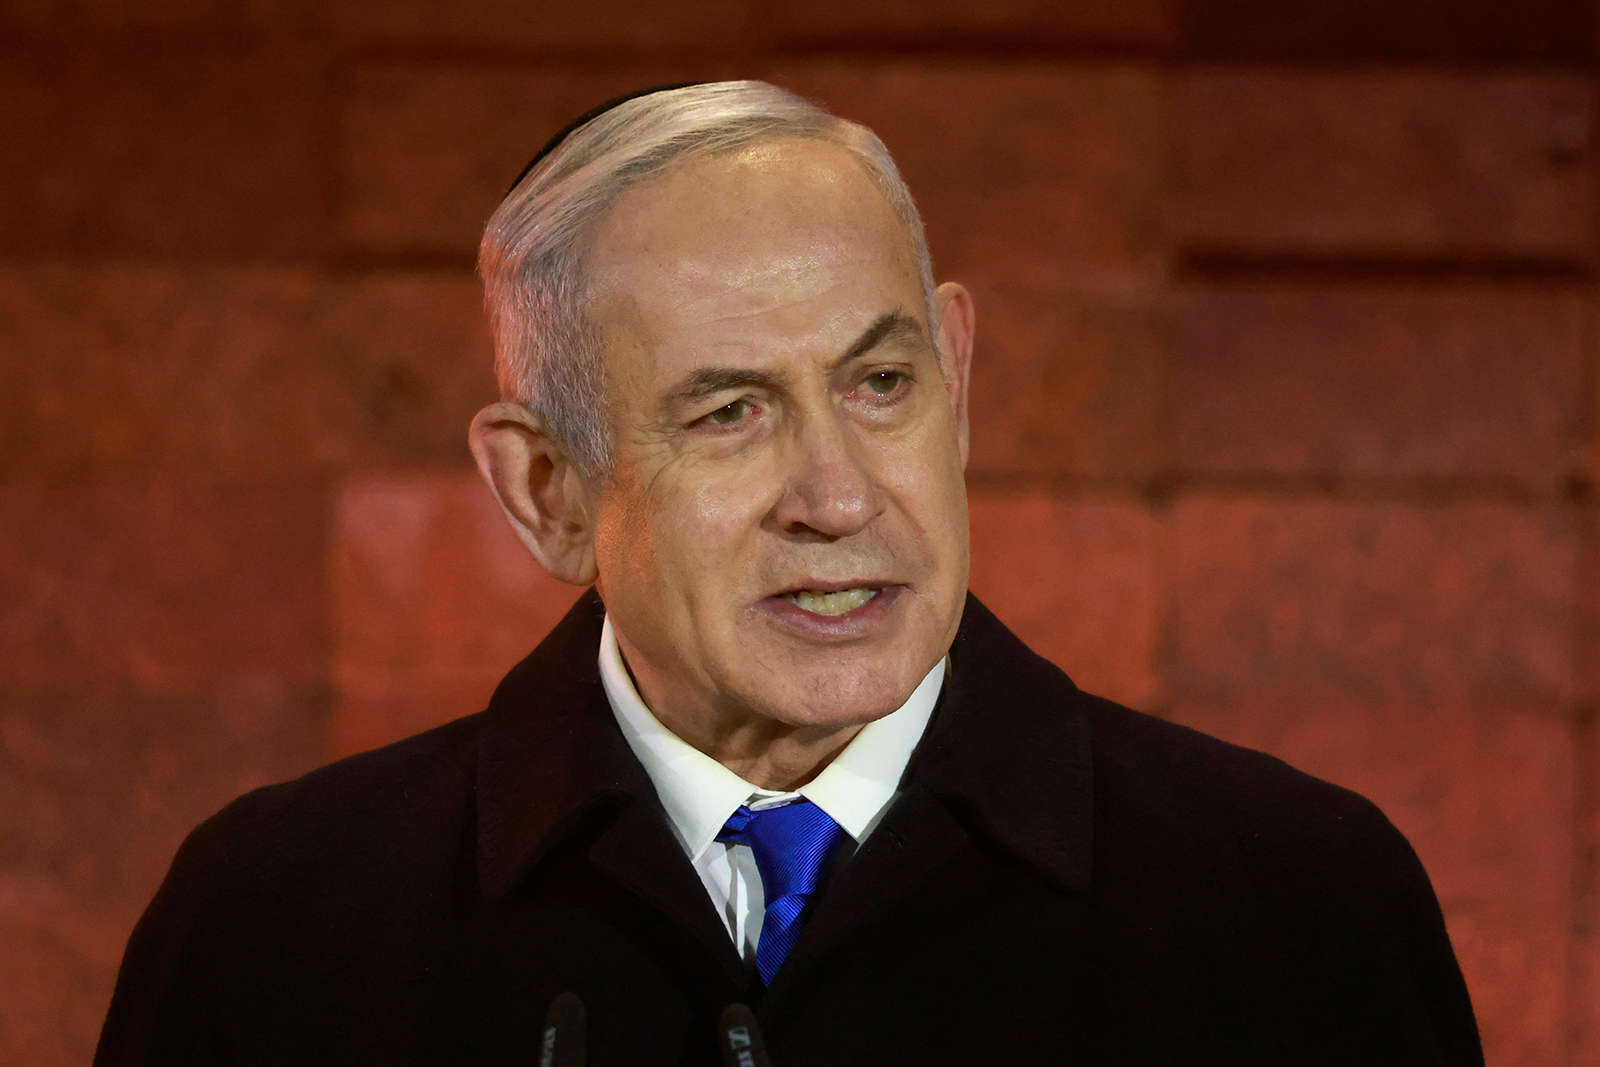 Israel's Prime Minister Benjamin Netanyahu speaks during an event in Jerusalem on May 5.